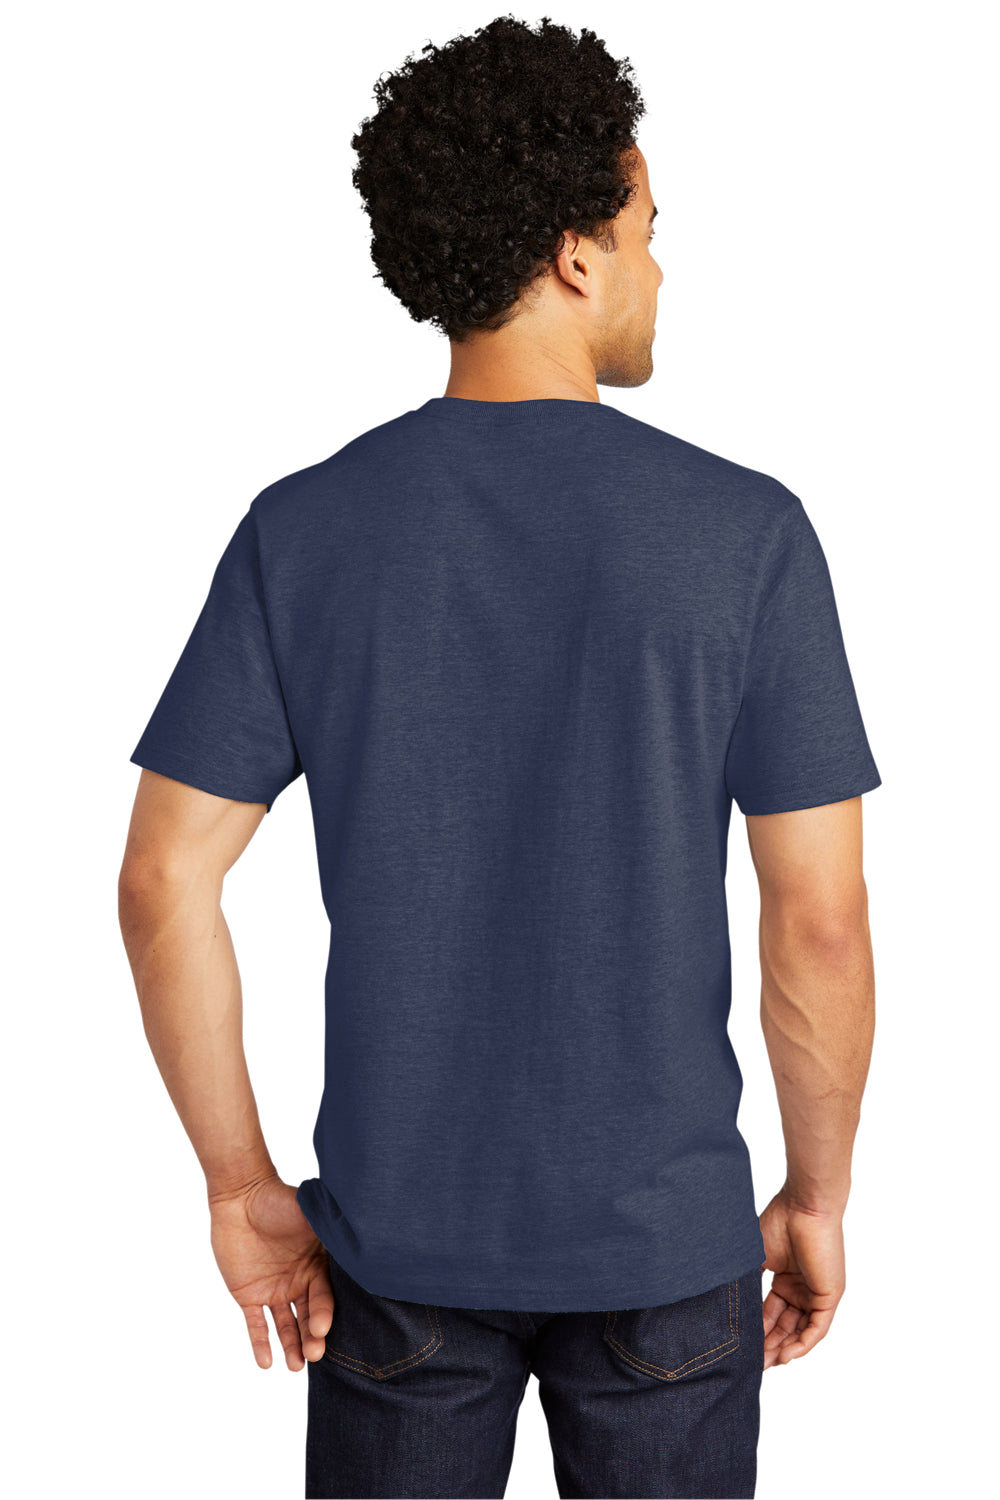 Port & Company Mens Bouncer Short Sleeve Crewneck T-Shirt Heather Team Navy Blue Side